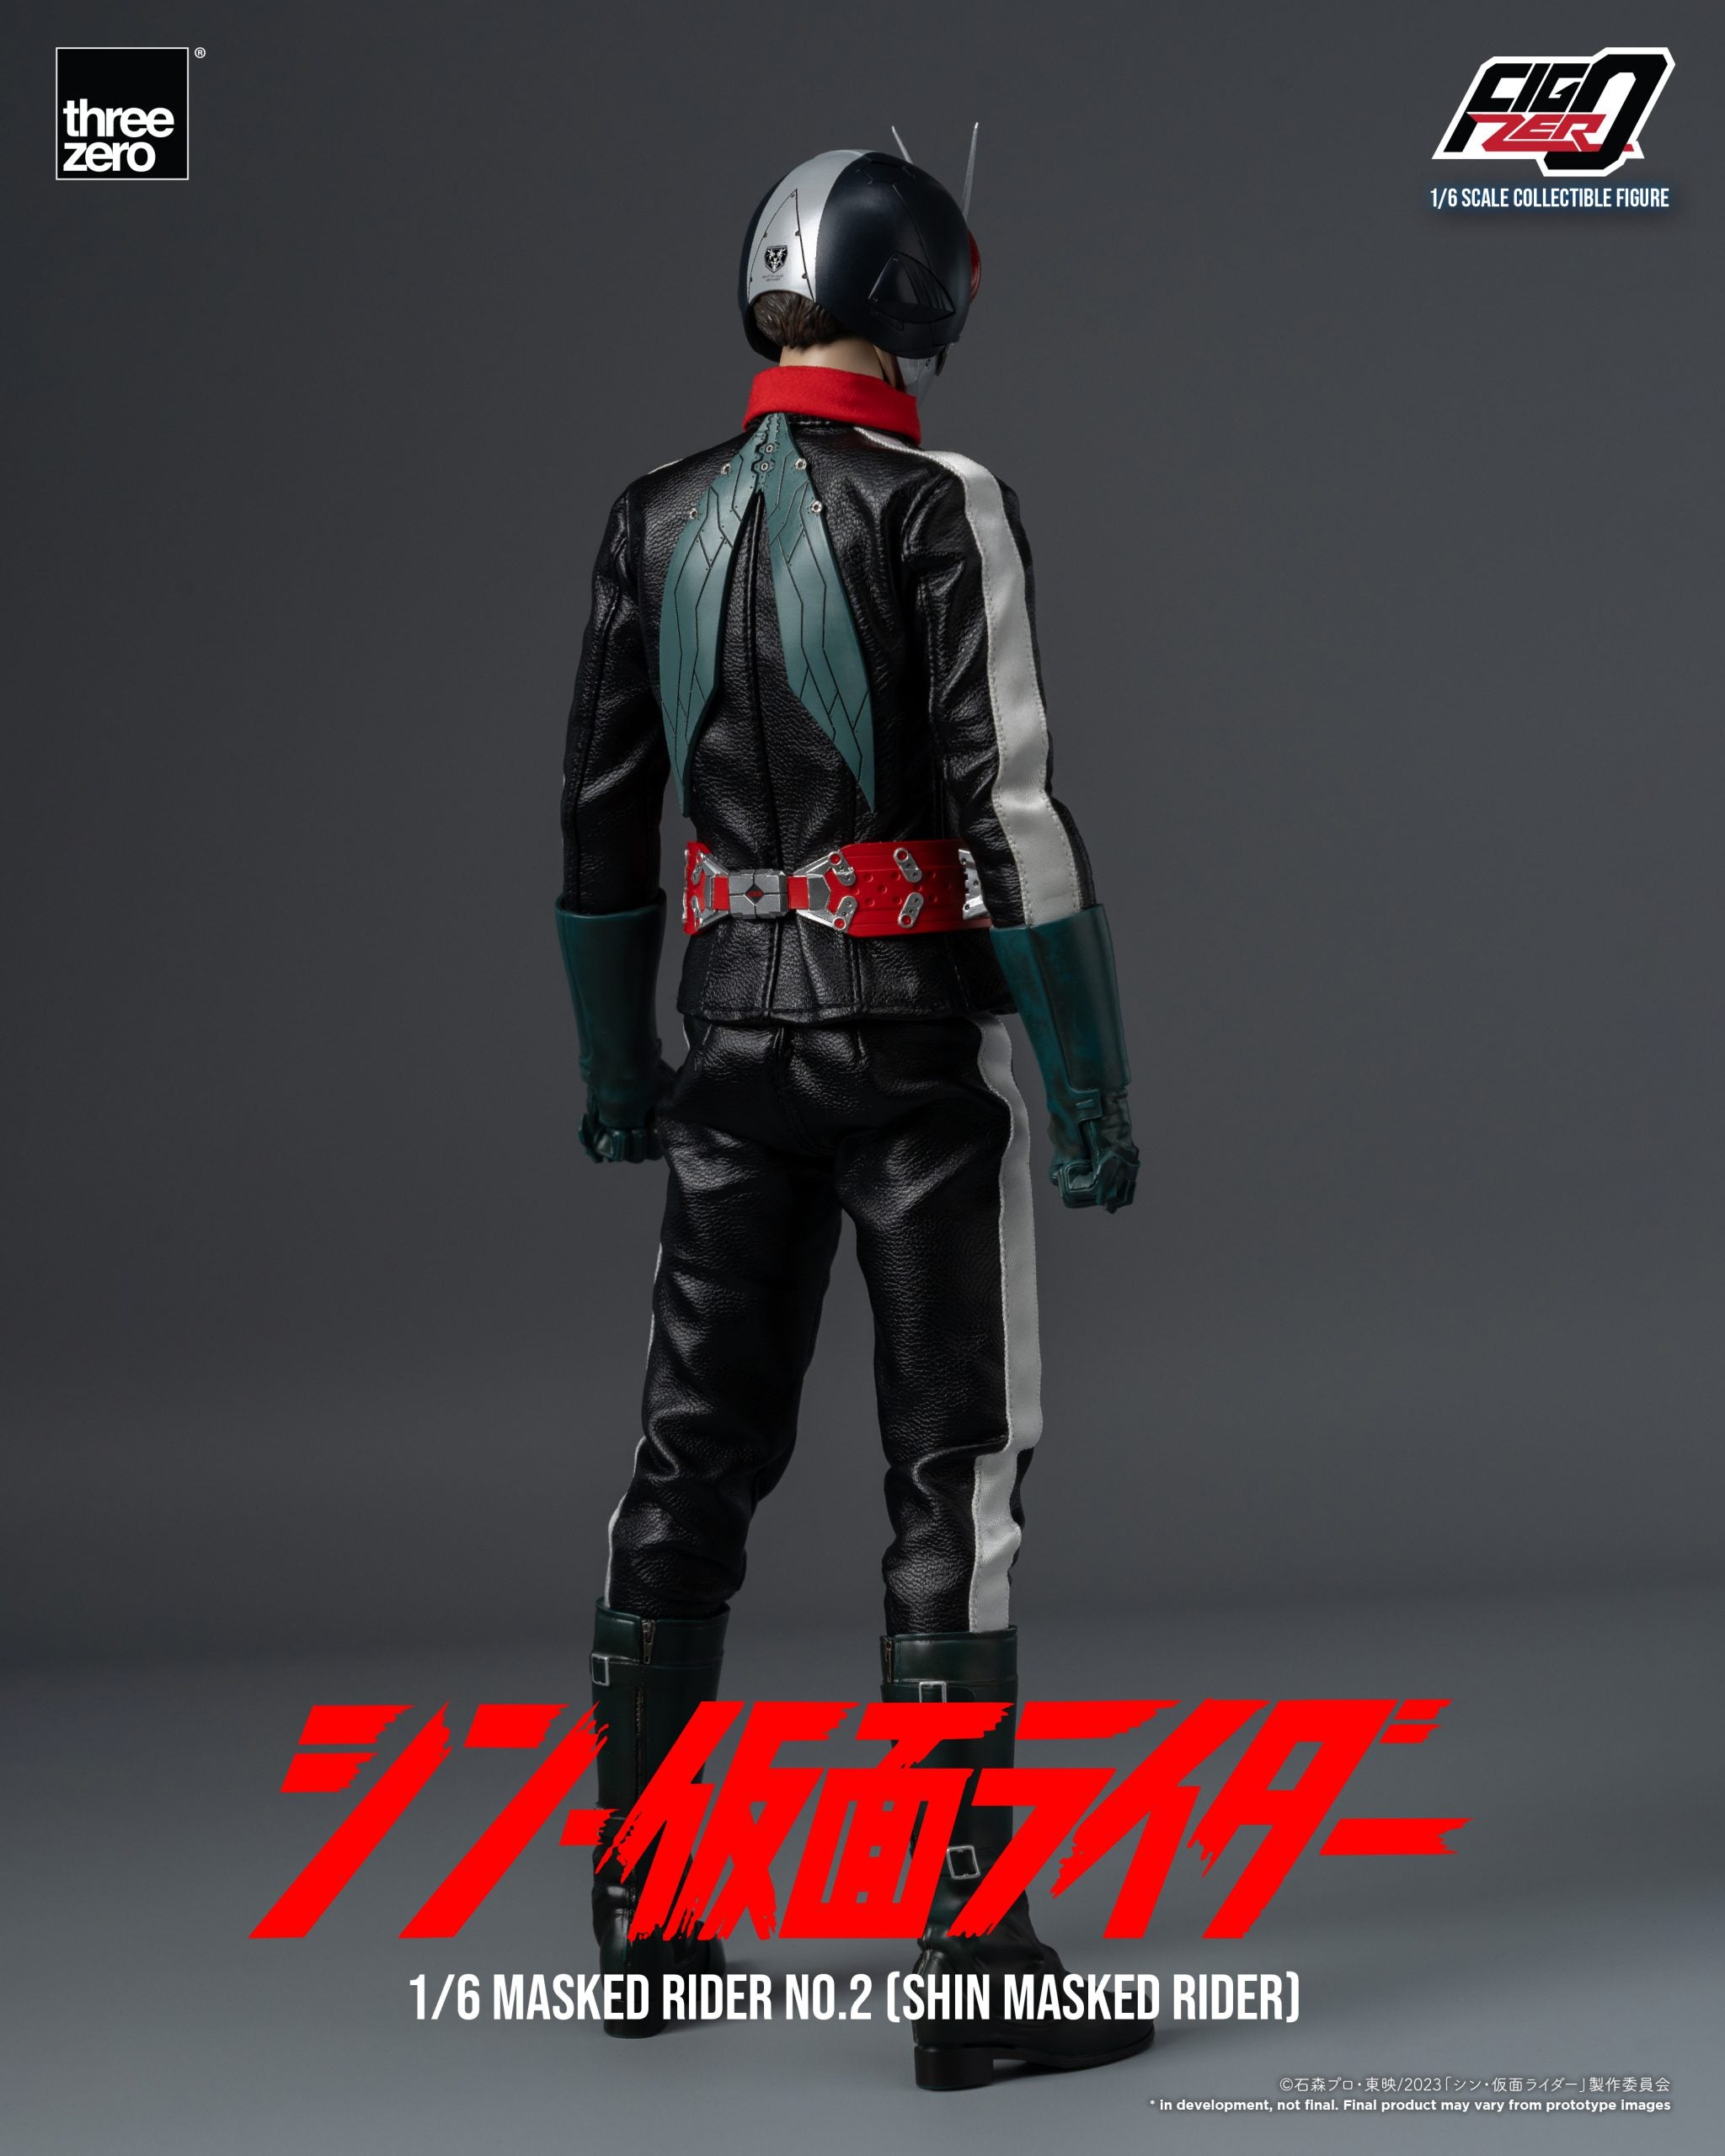 threezero - FigZero - Shin Masked Rider - Masked Rider No. 2 (1/6 Scale)